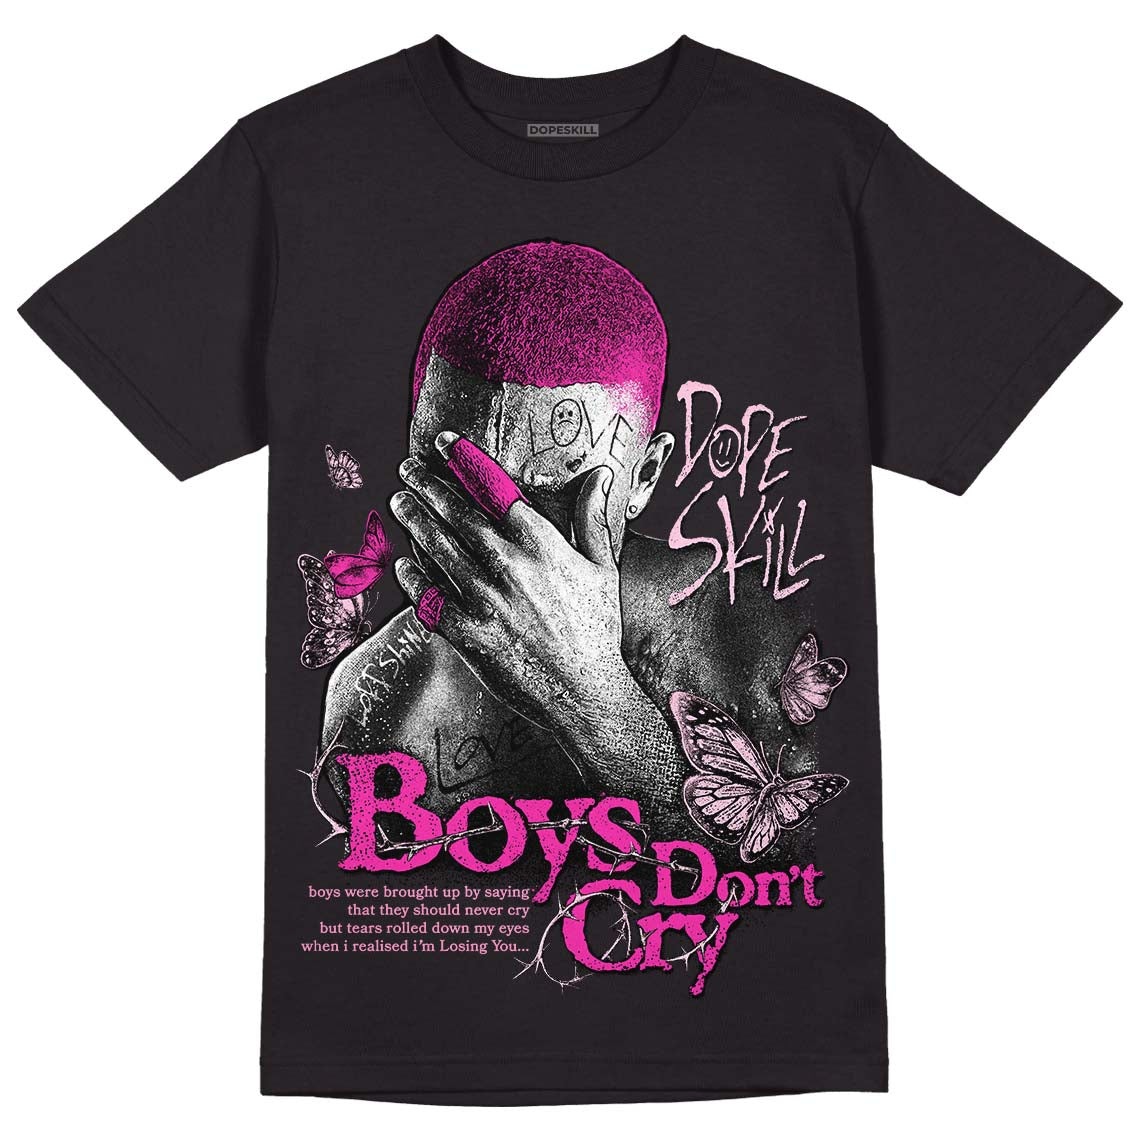 Dunk Low GS 'Triple Pink' DopeSkill T-Shirt Boys Don't Cry Graphic Streetwear - Black